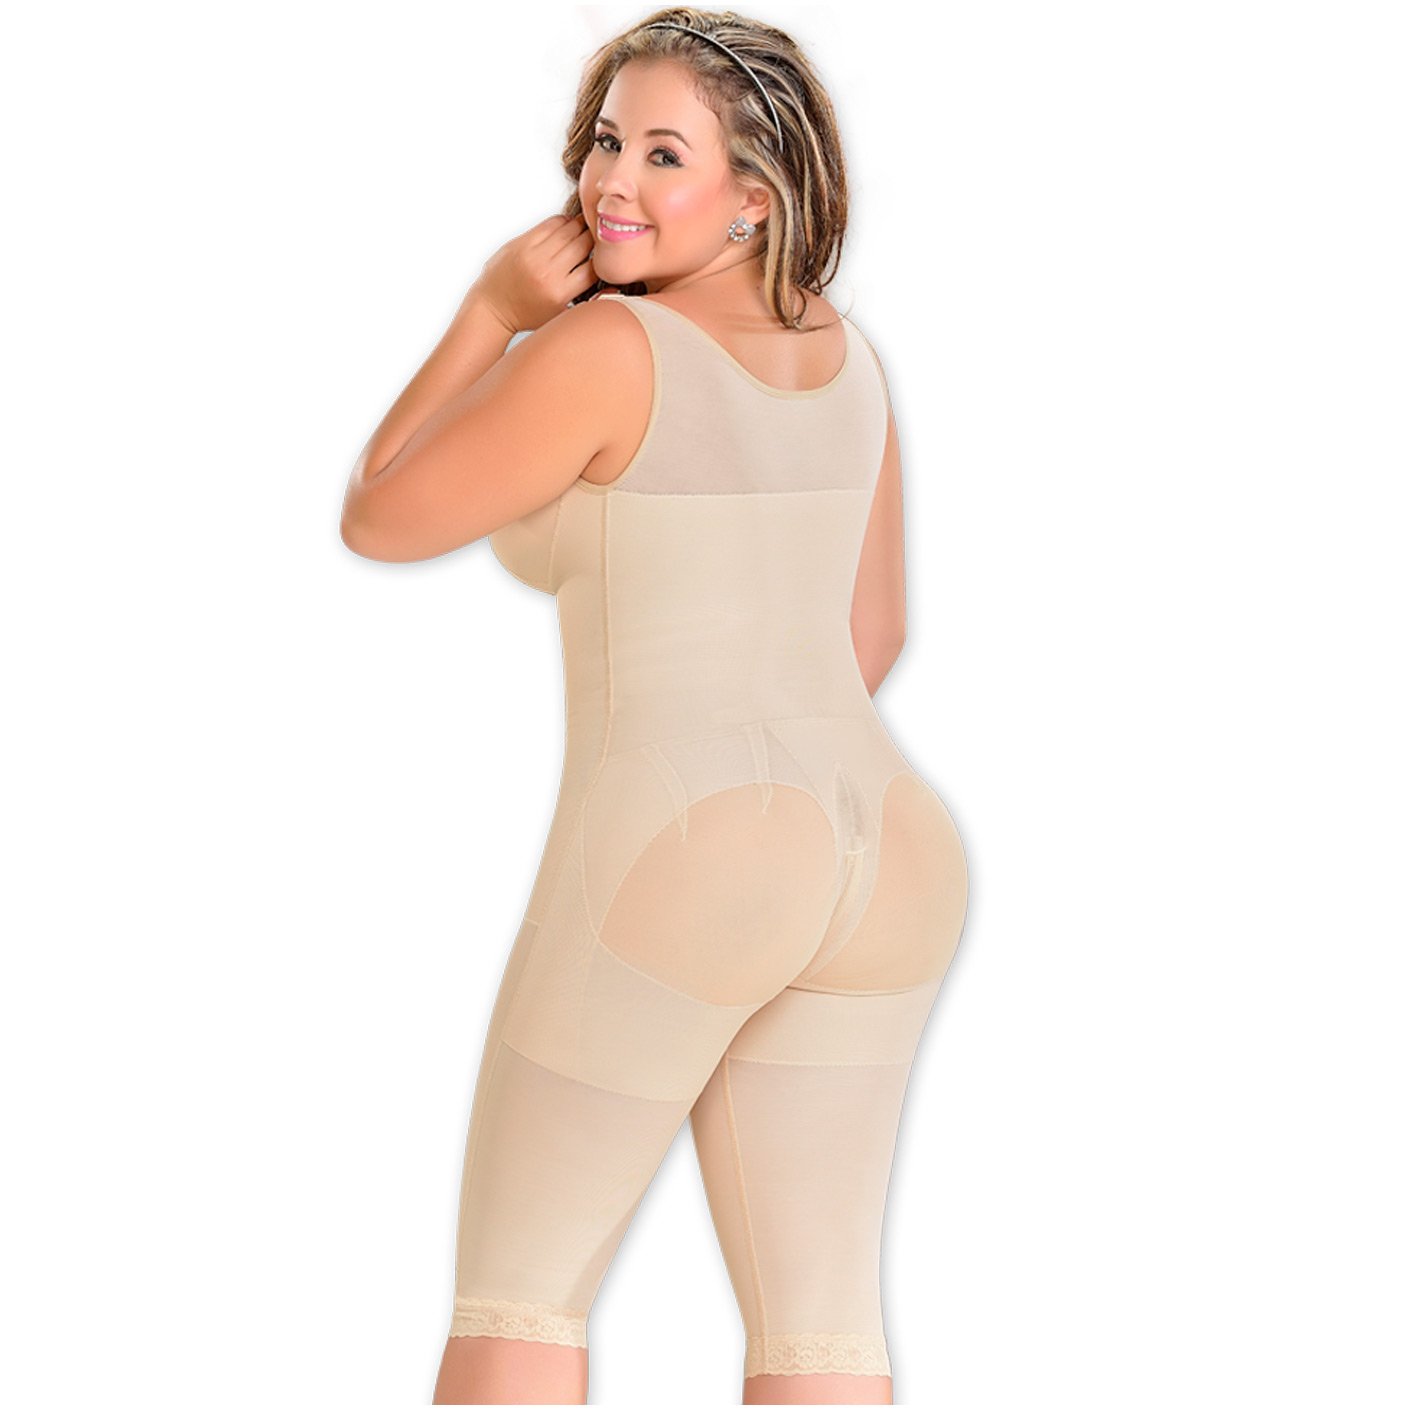 nsendm Female Underwear Adult Miss Belt Reviews Shapewear for